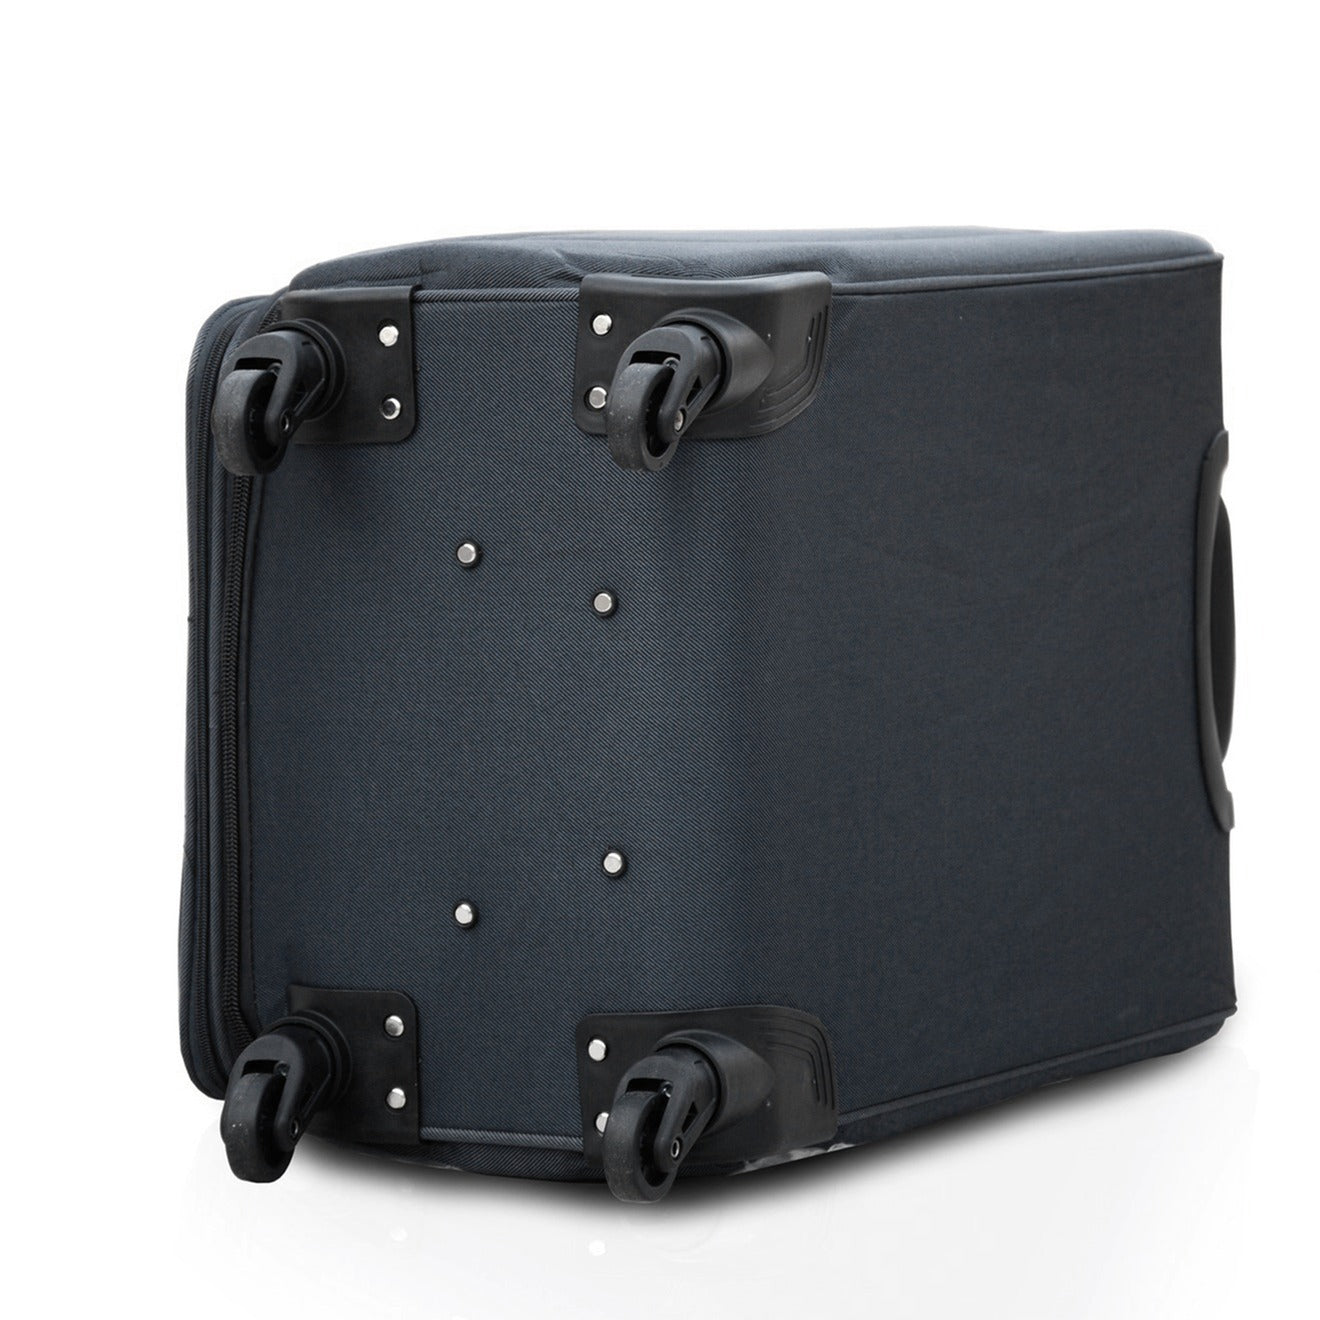 3 Piece Full Set 20" 24" 28 Inches Black Colour SJ JIAN 4 Wheel Luggage Lightweight Soft Material Trolley Bag